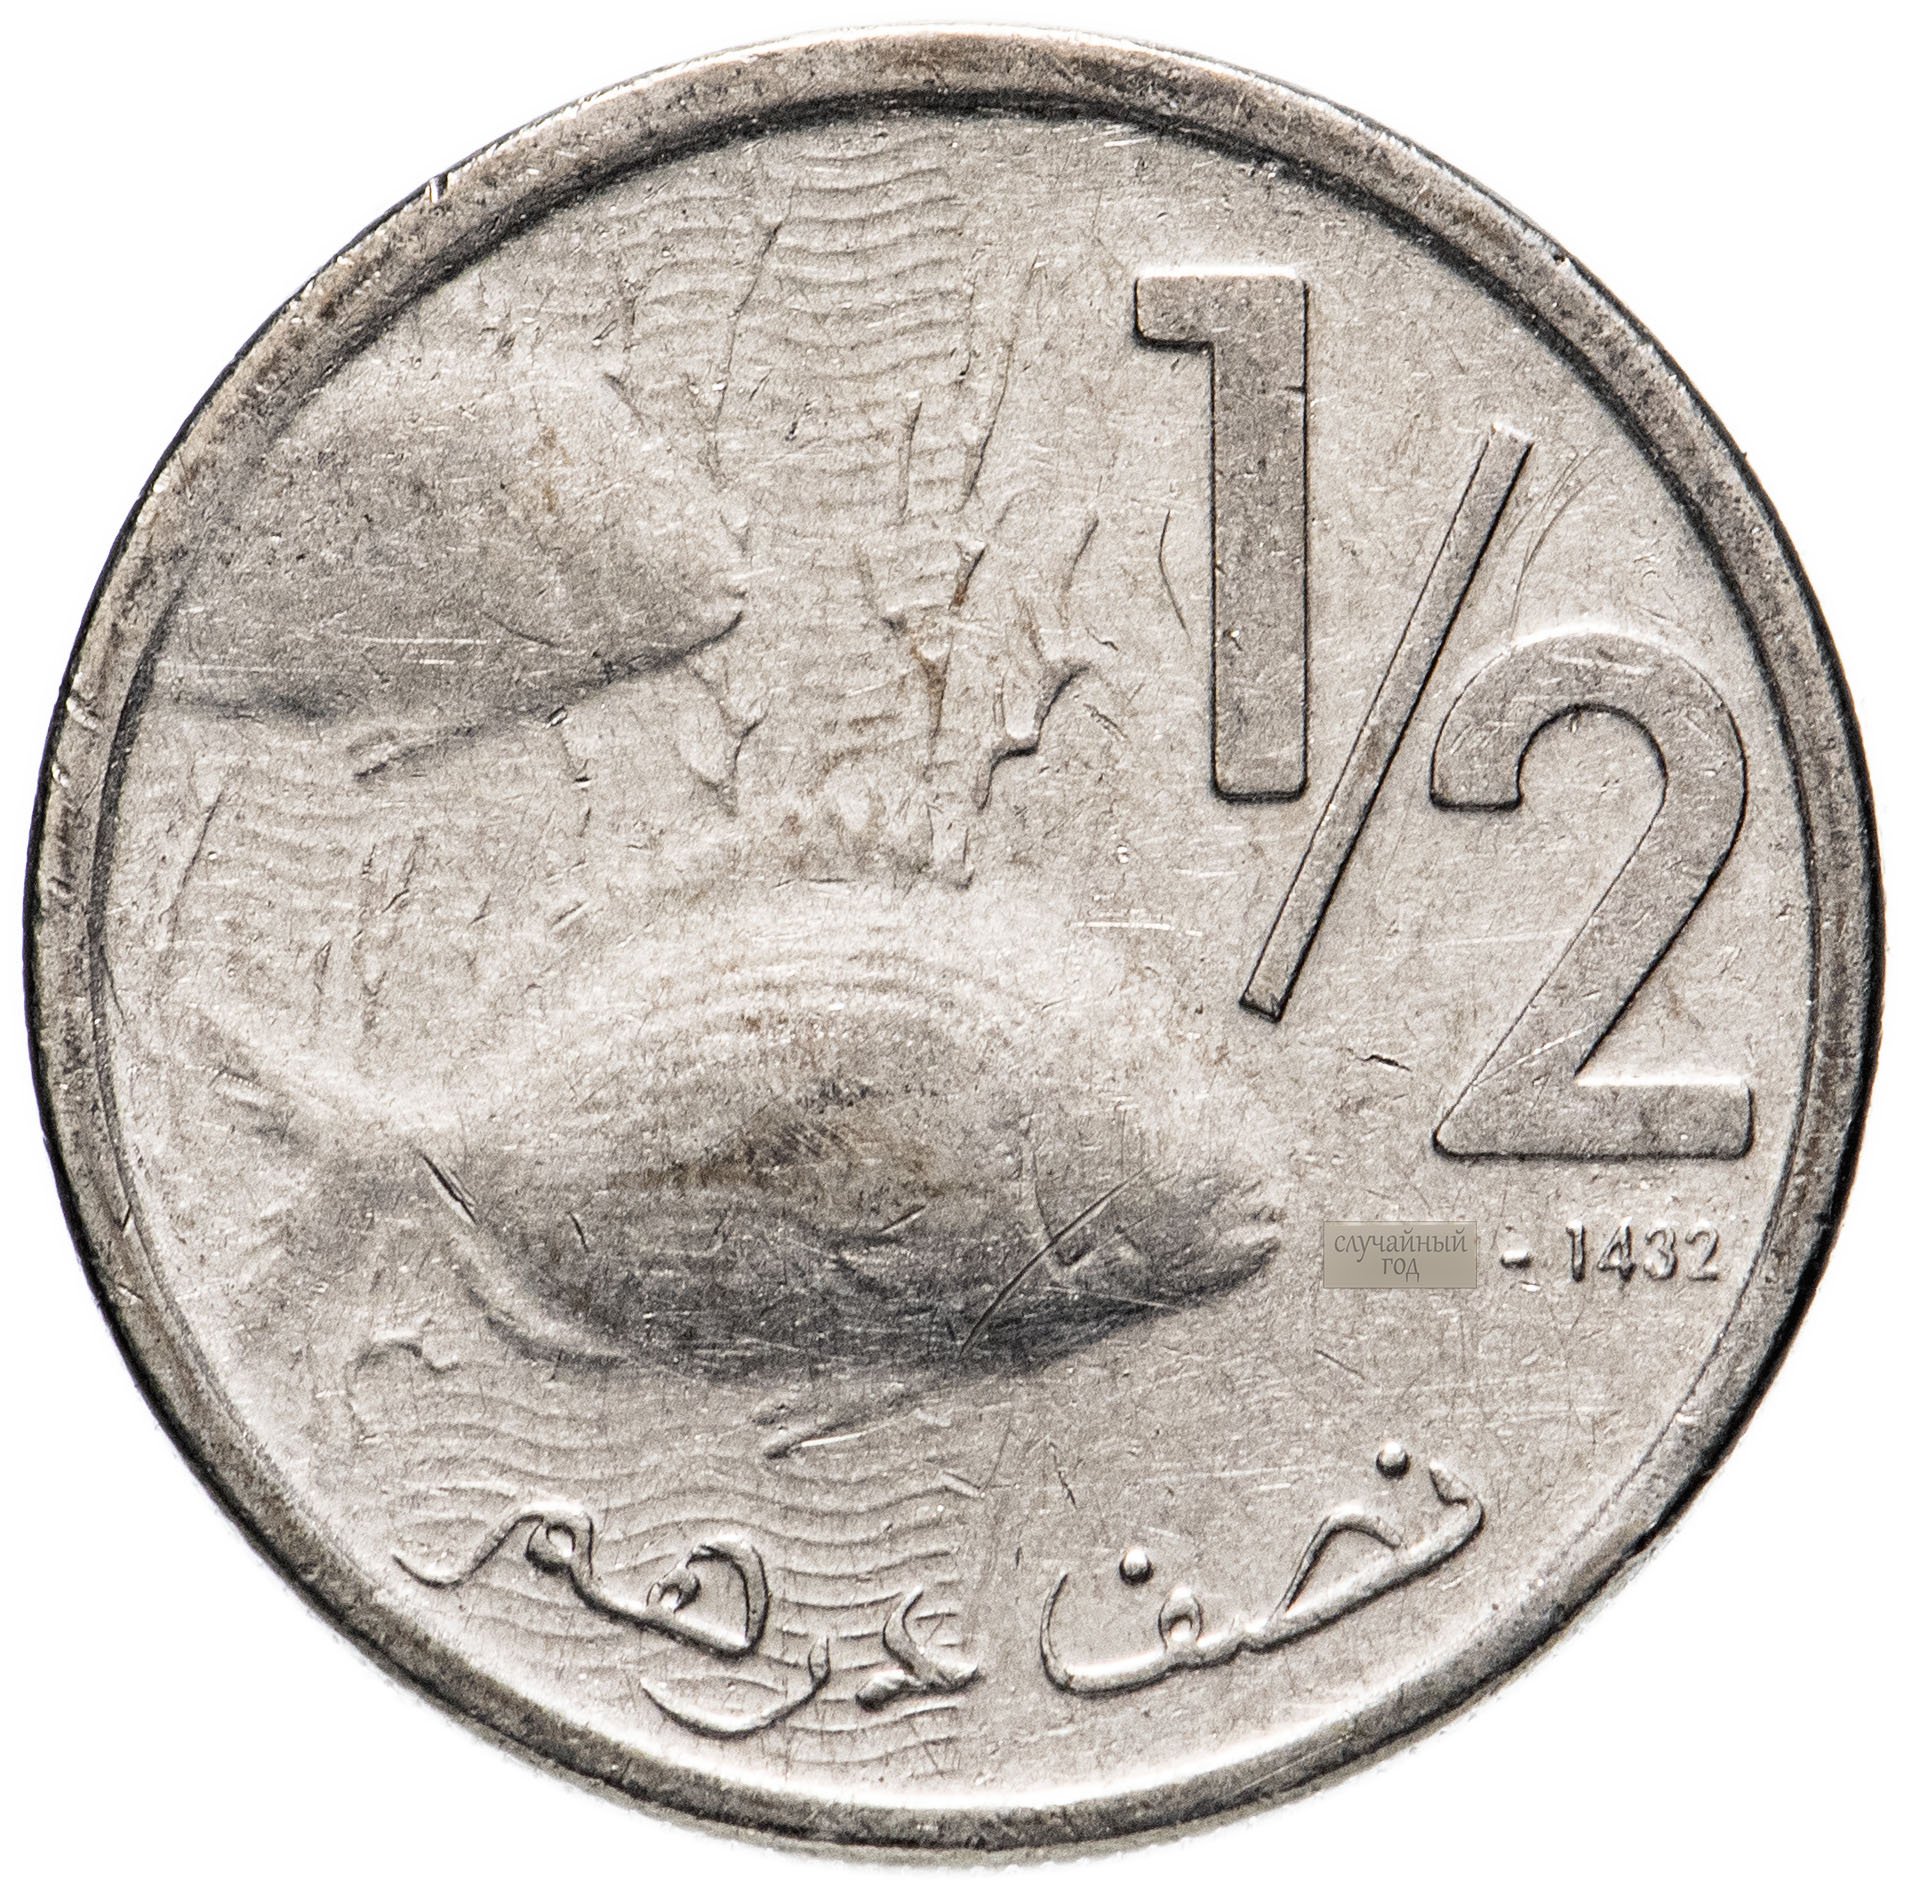 69 дирхам. 1/2 Дирхама Марокко. 2 Дирхама монета. Монеты Марокко. Монета 2011-1432.